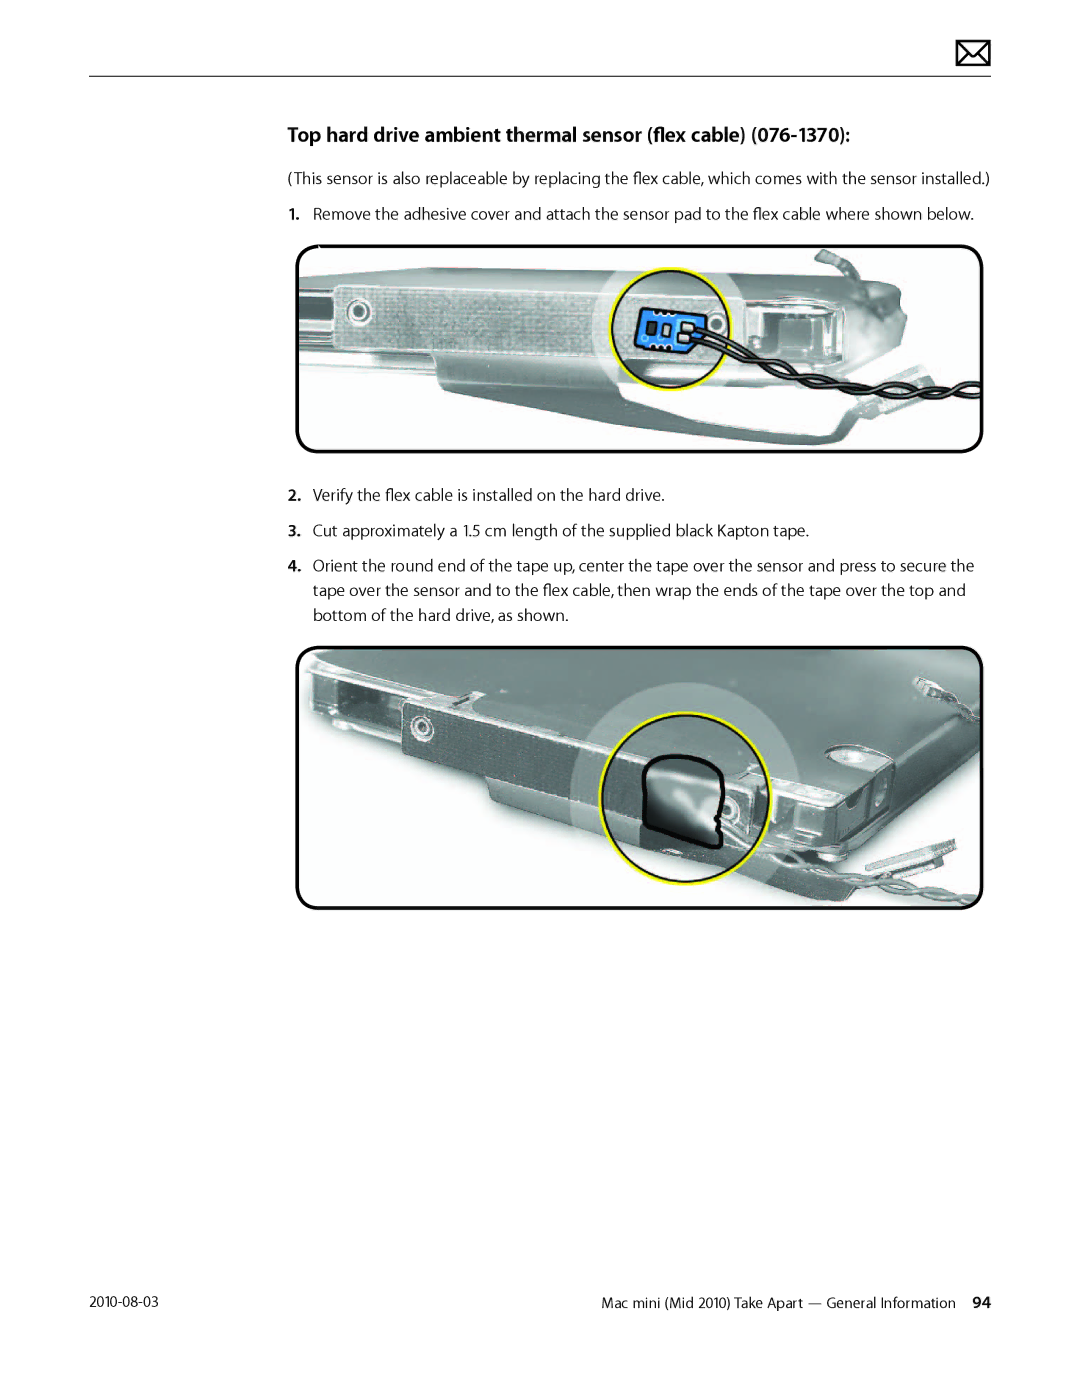 Apple Mac mini manual Top hard drive ambient thermal sensor flex cable 